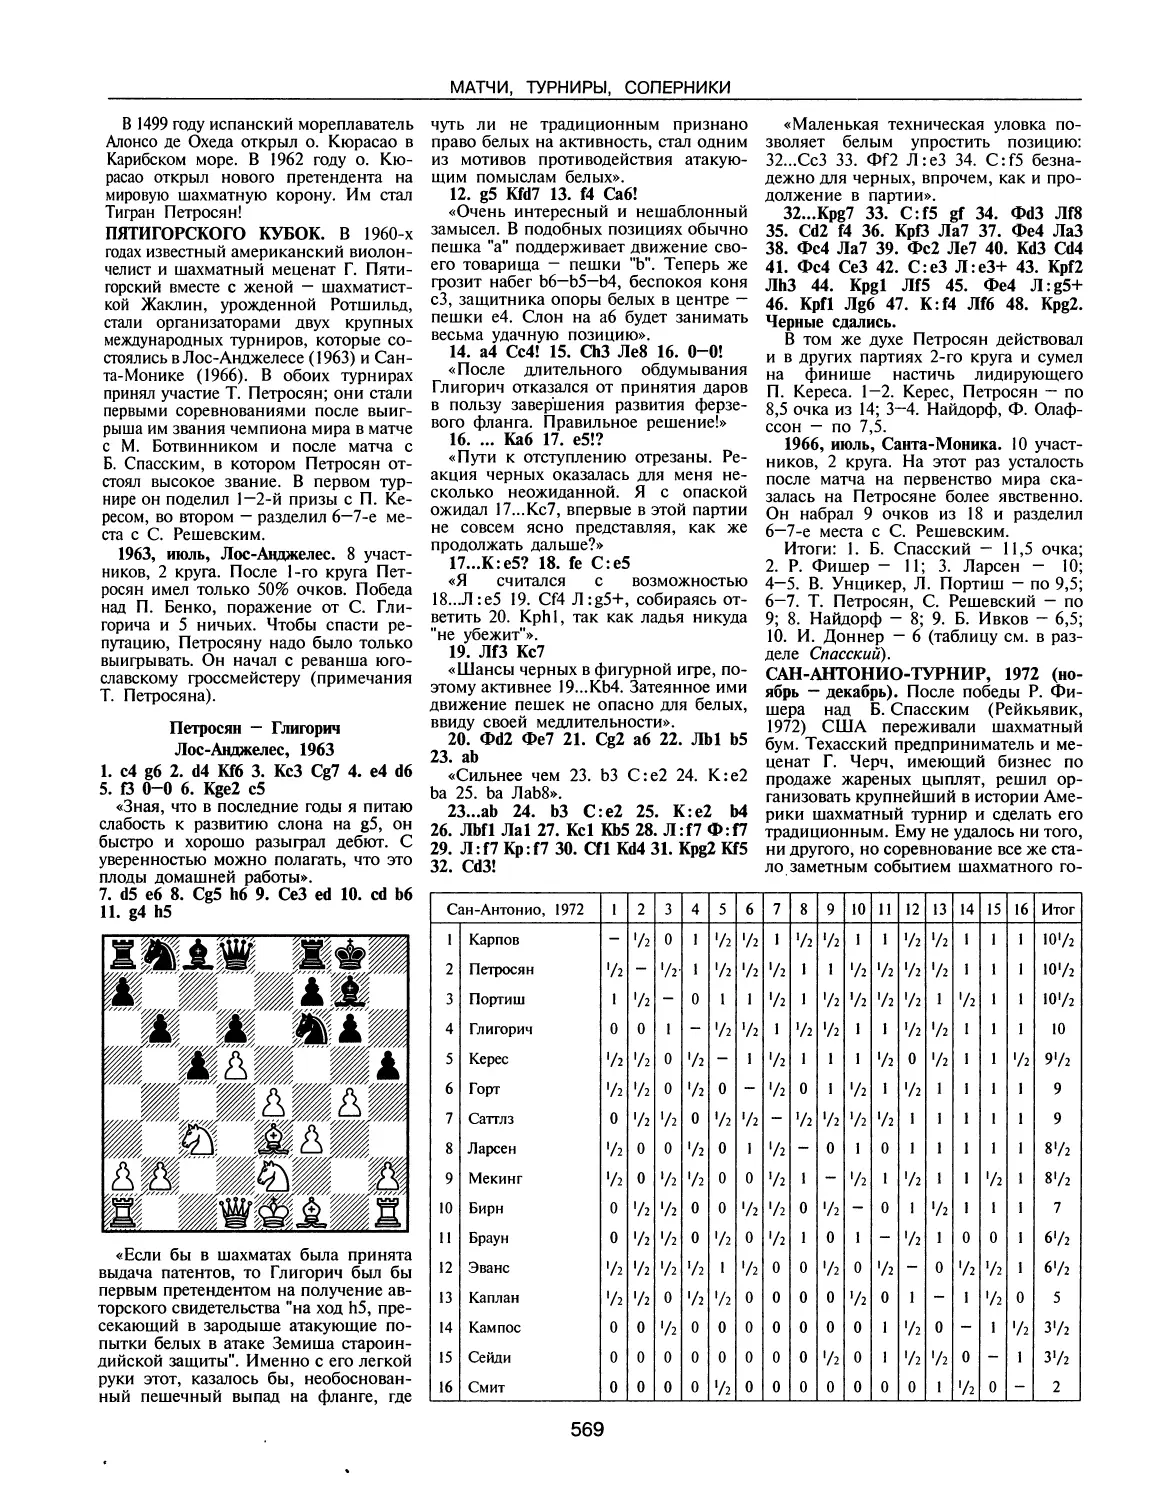 Пятигорского кубок
Сан-Антонио-турнир, 1972